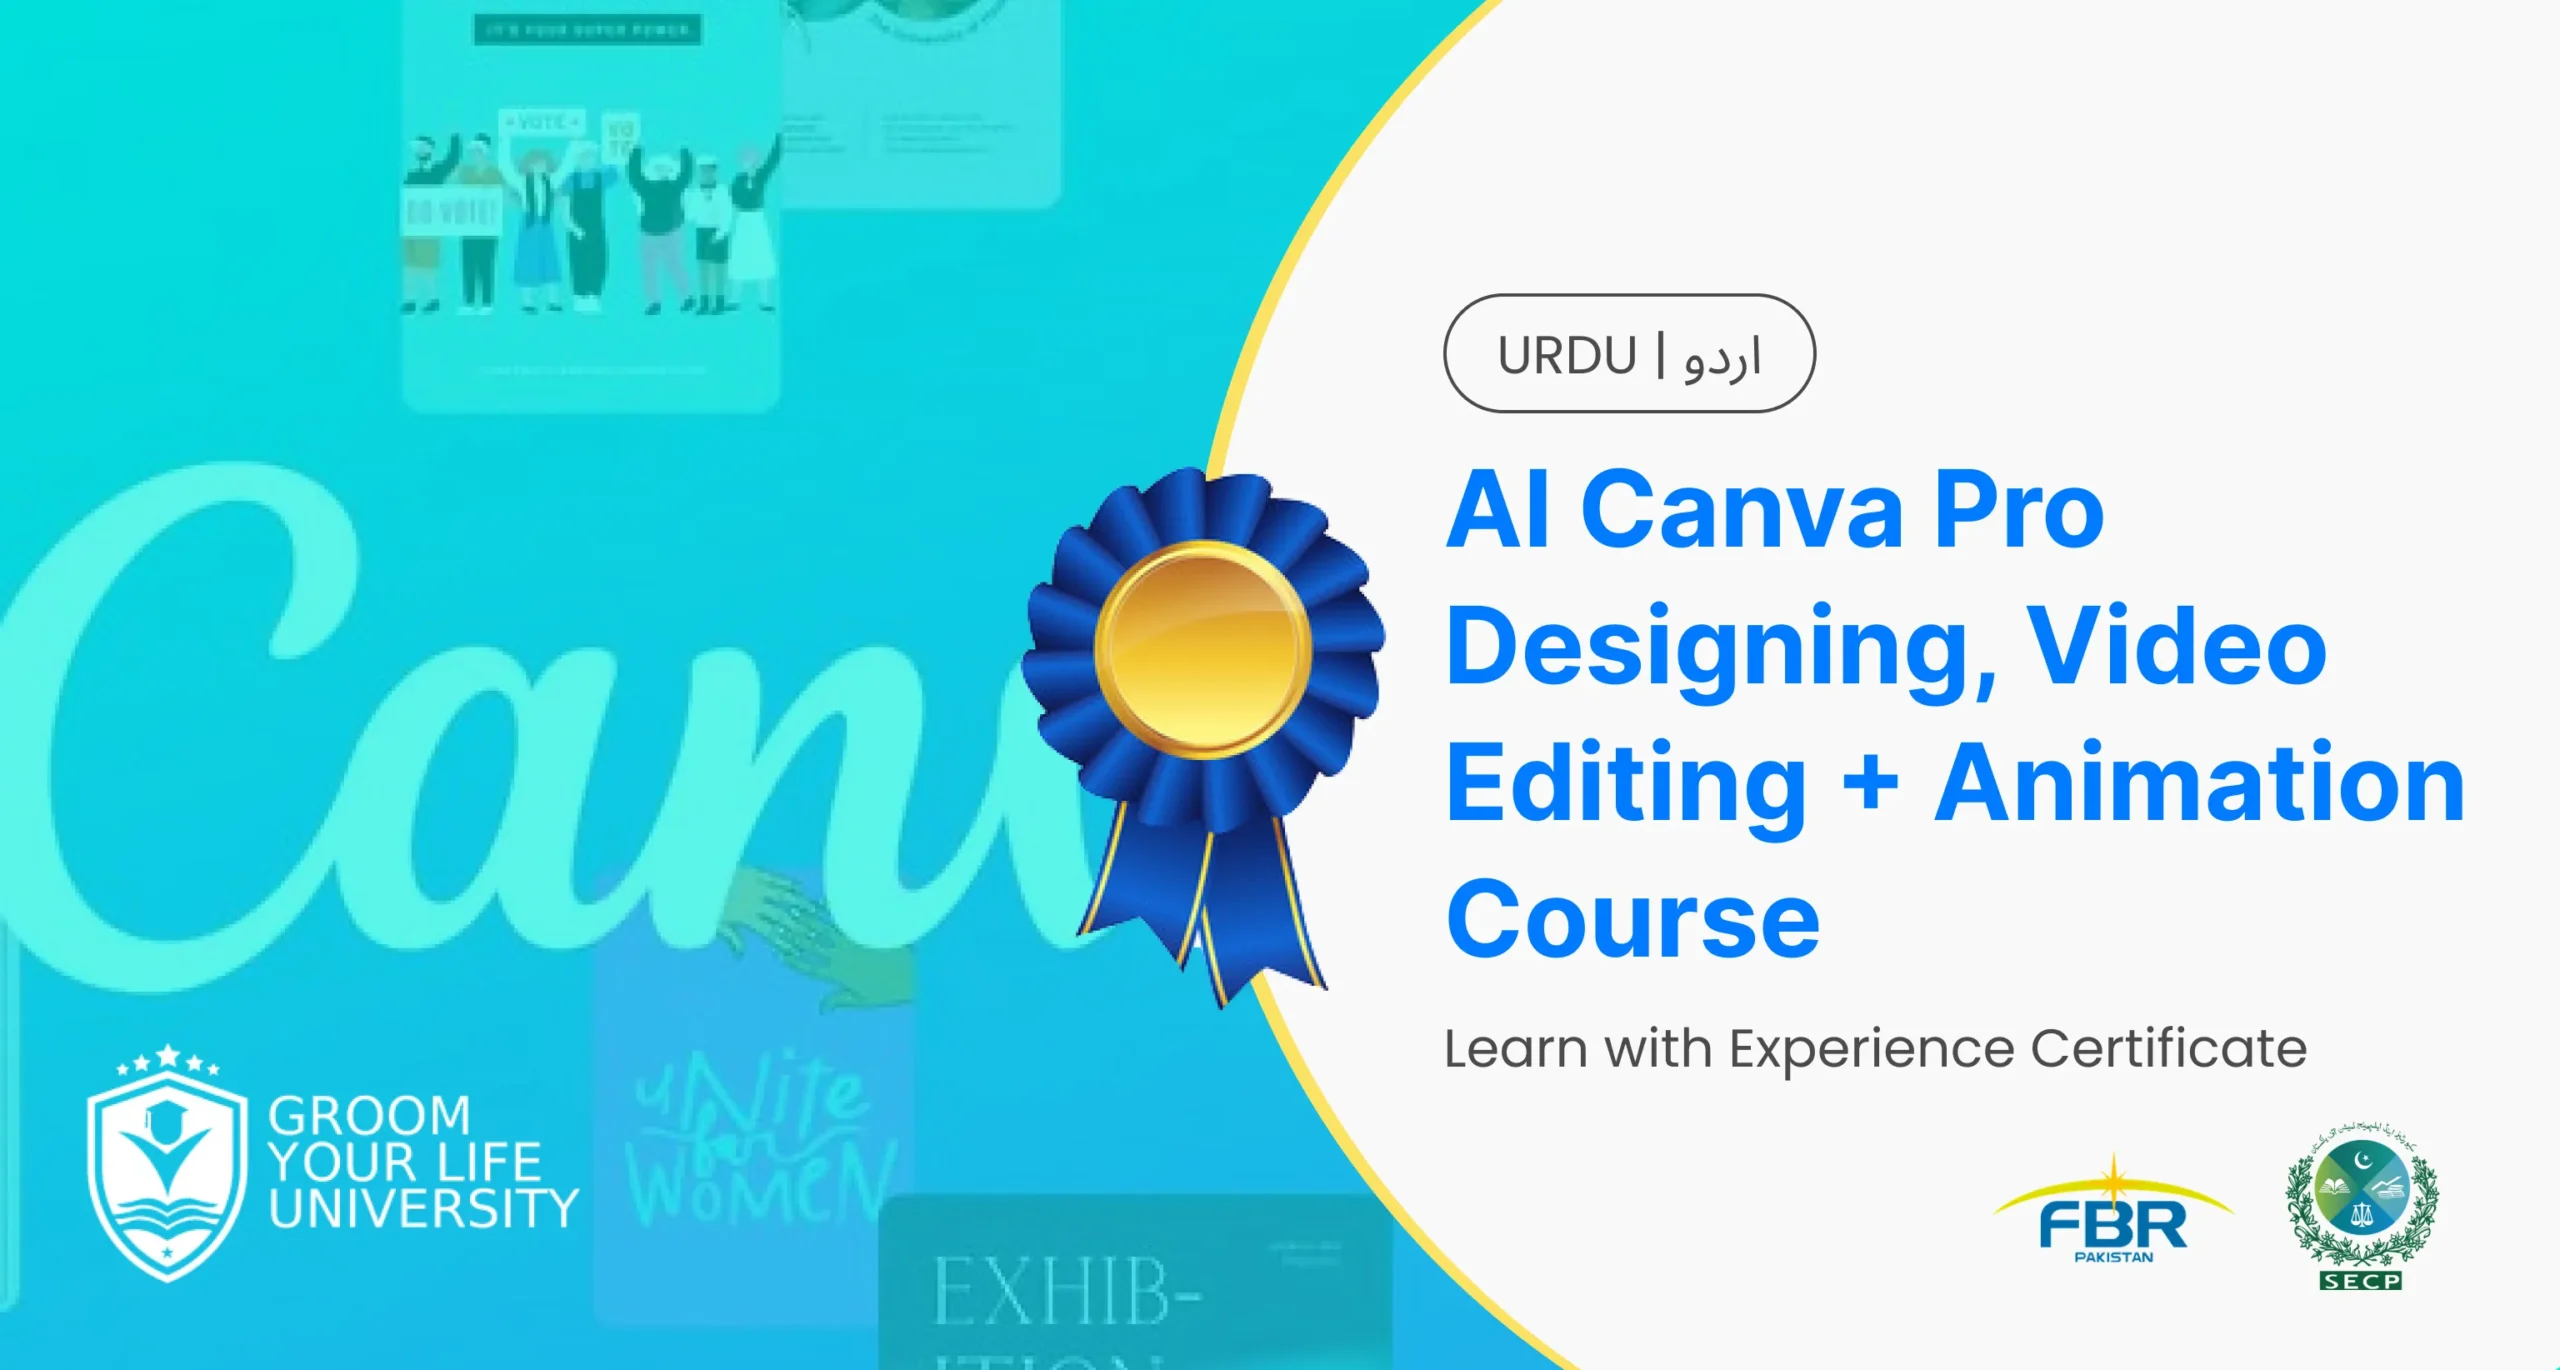 AI Canva Pro Designing, Video Editing + Animation